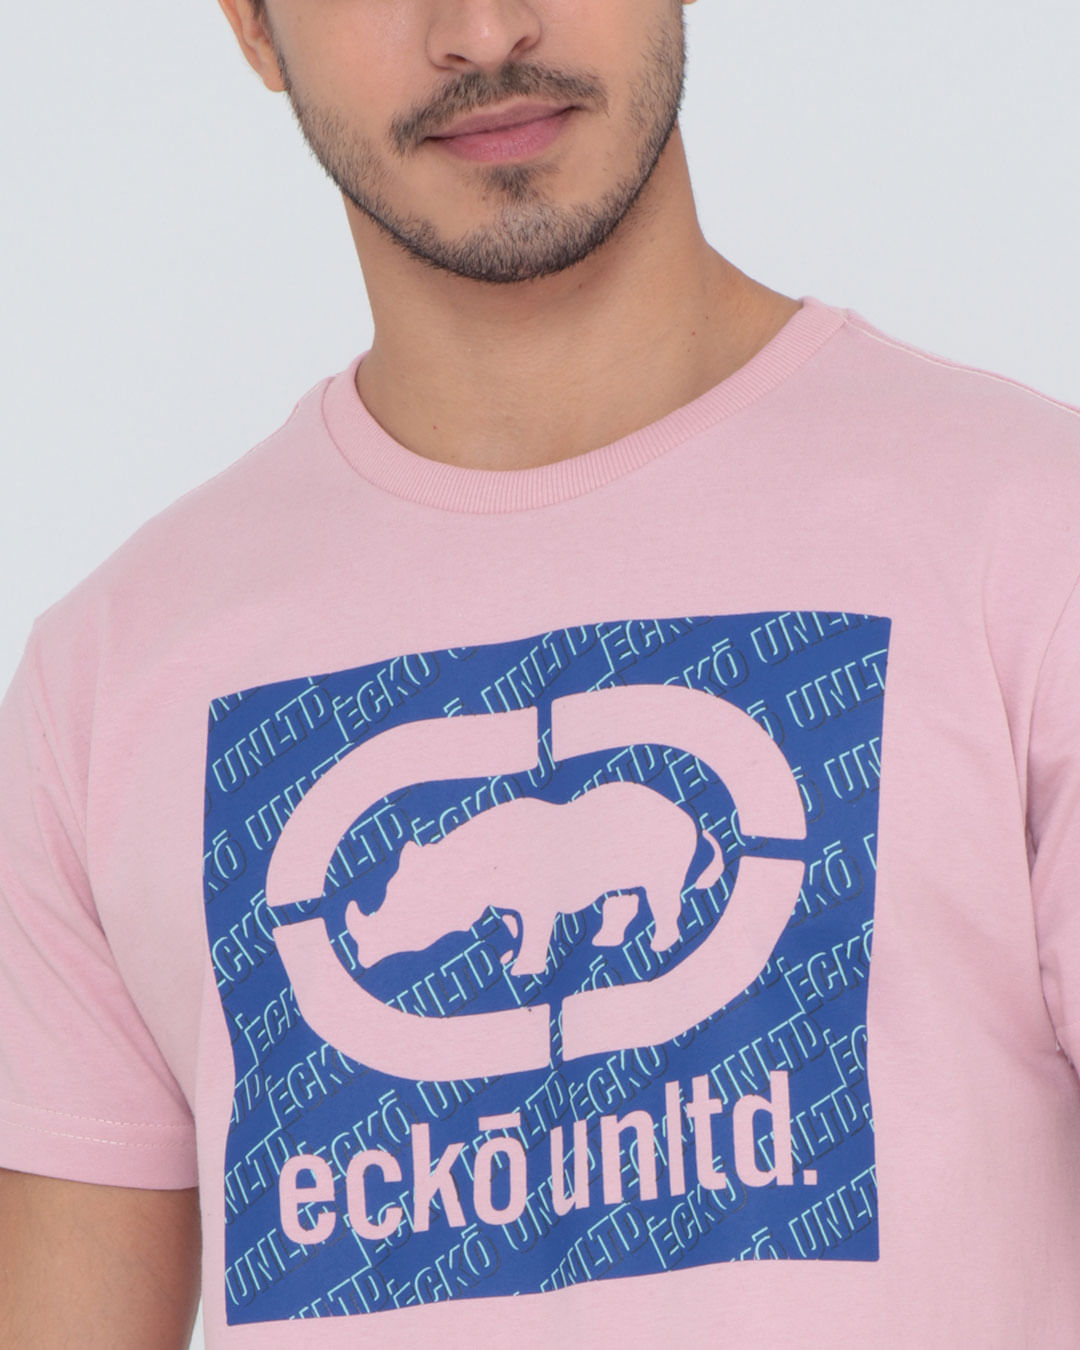 Camiseta-Basica-K021a-Ecko---Rosa-Claro